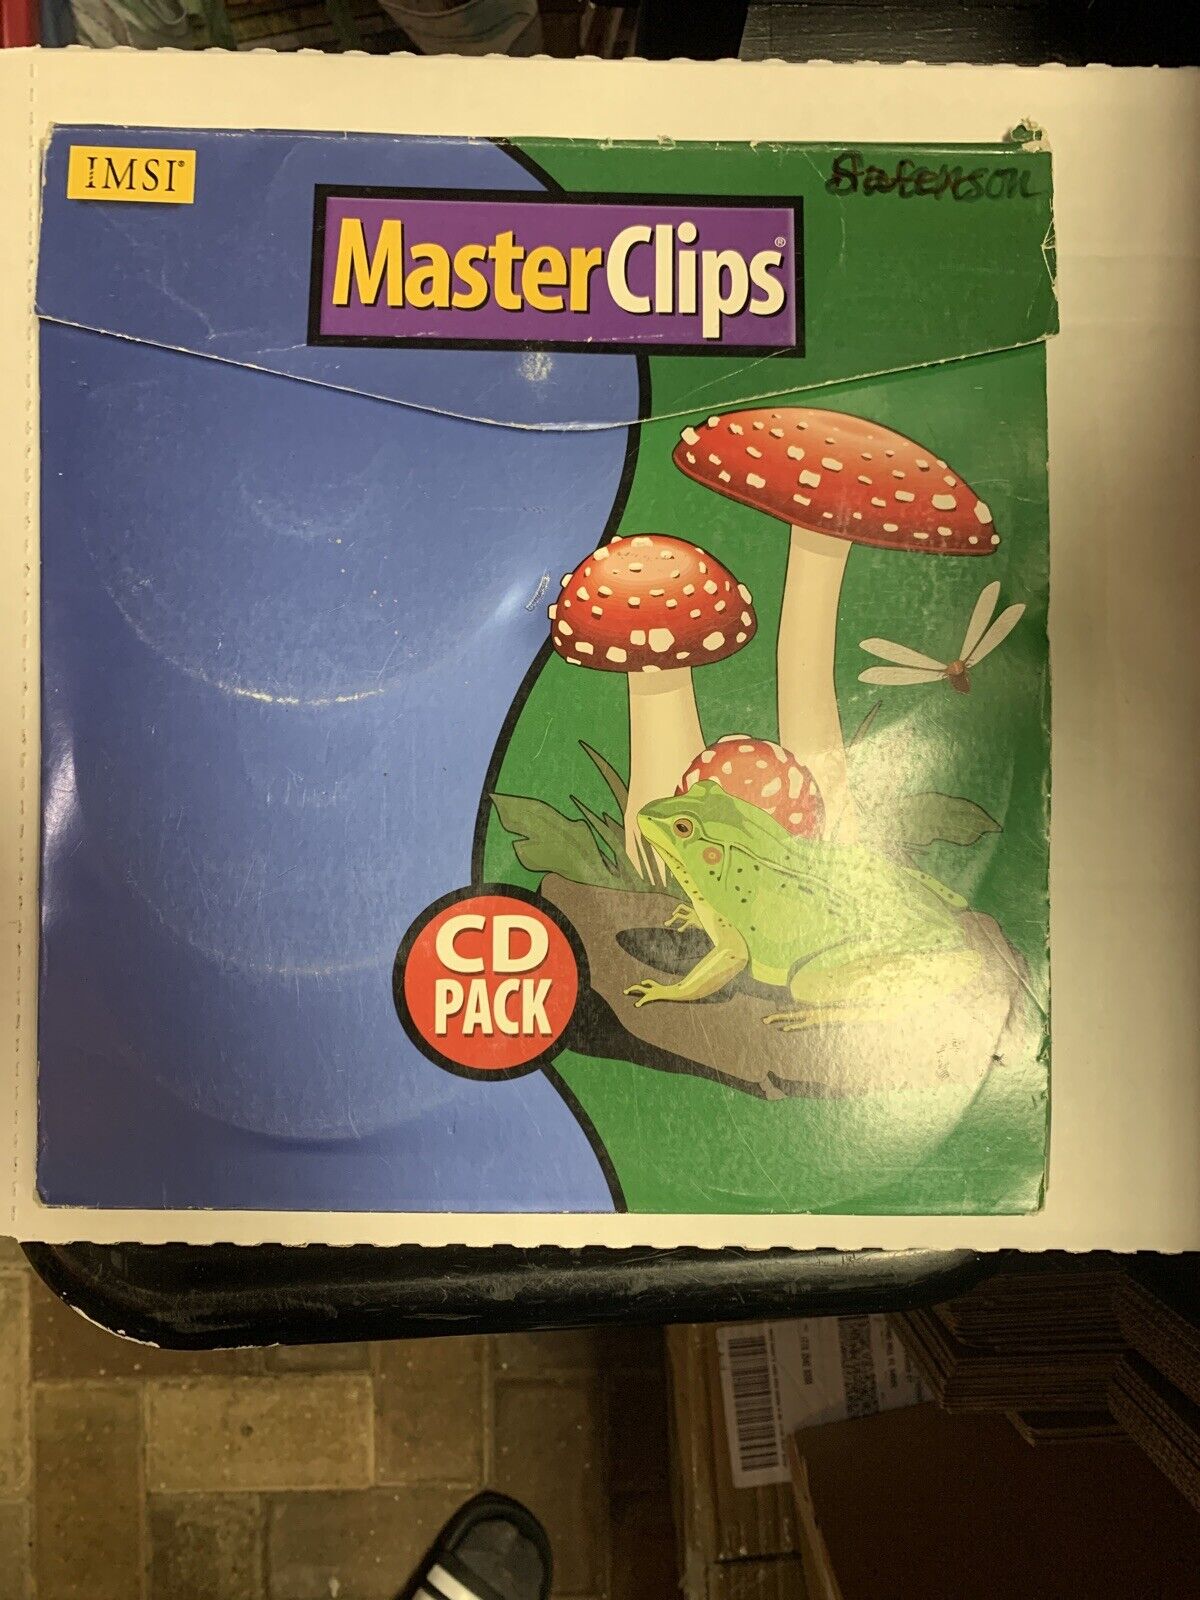 IMSI 48 CD Pack Masterclips (Master Clips) Clip Art windows 5-28 disks